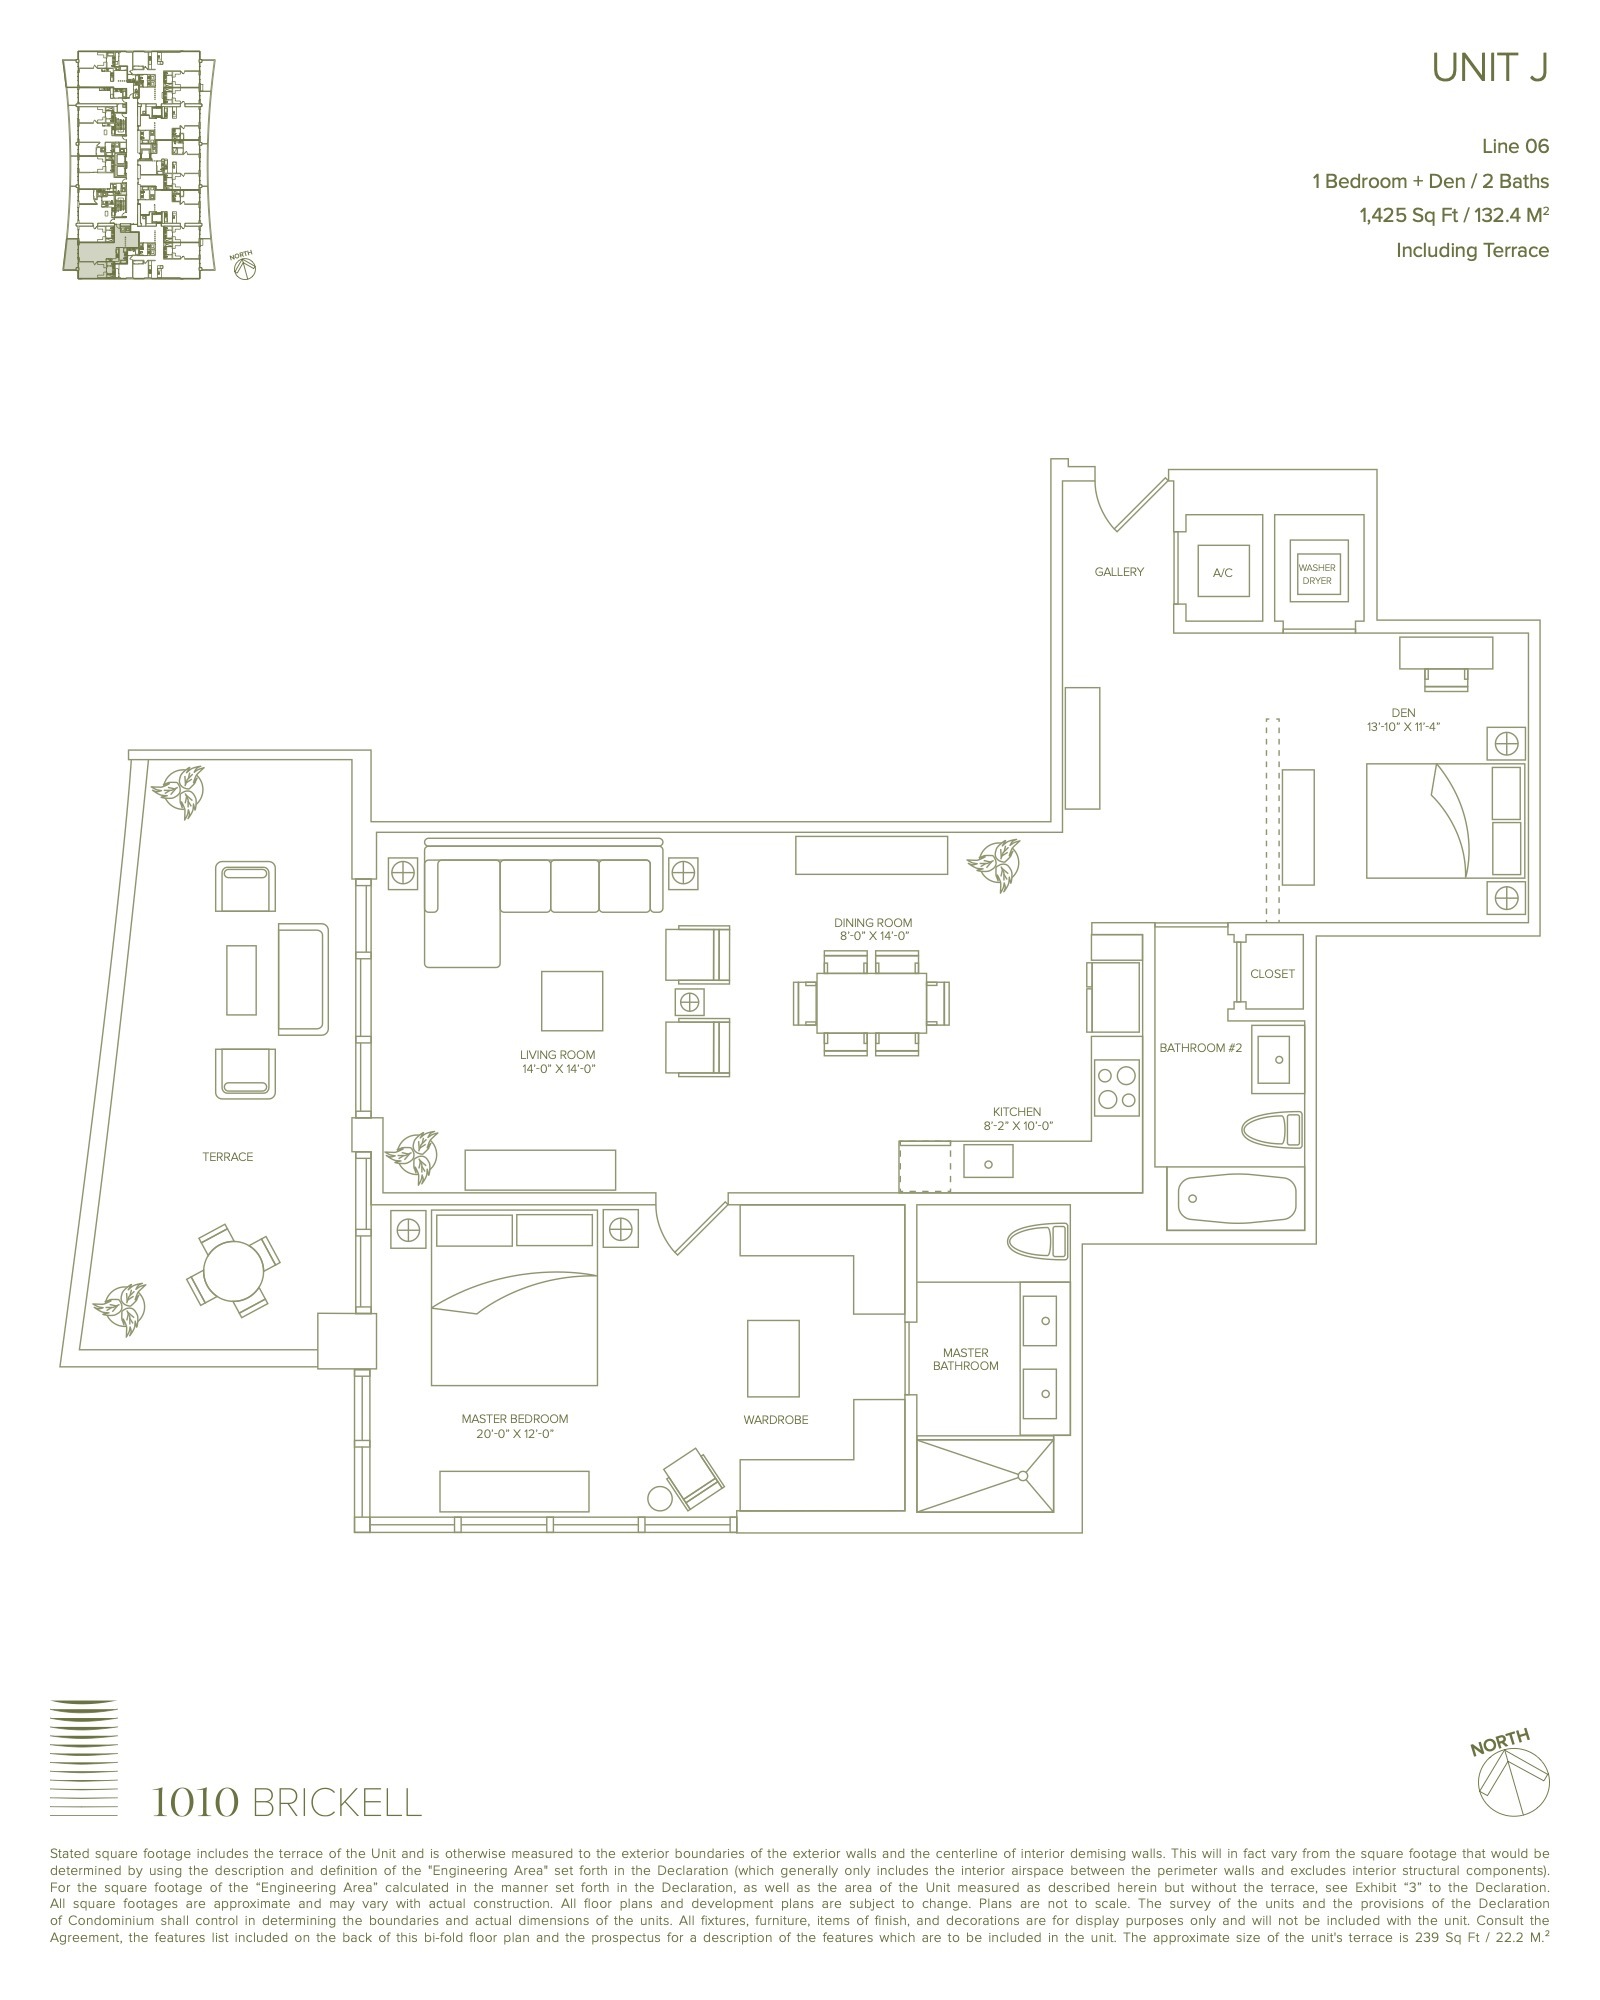 Floor Plan for 1010 Brickell Floorplans, Unit J